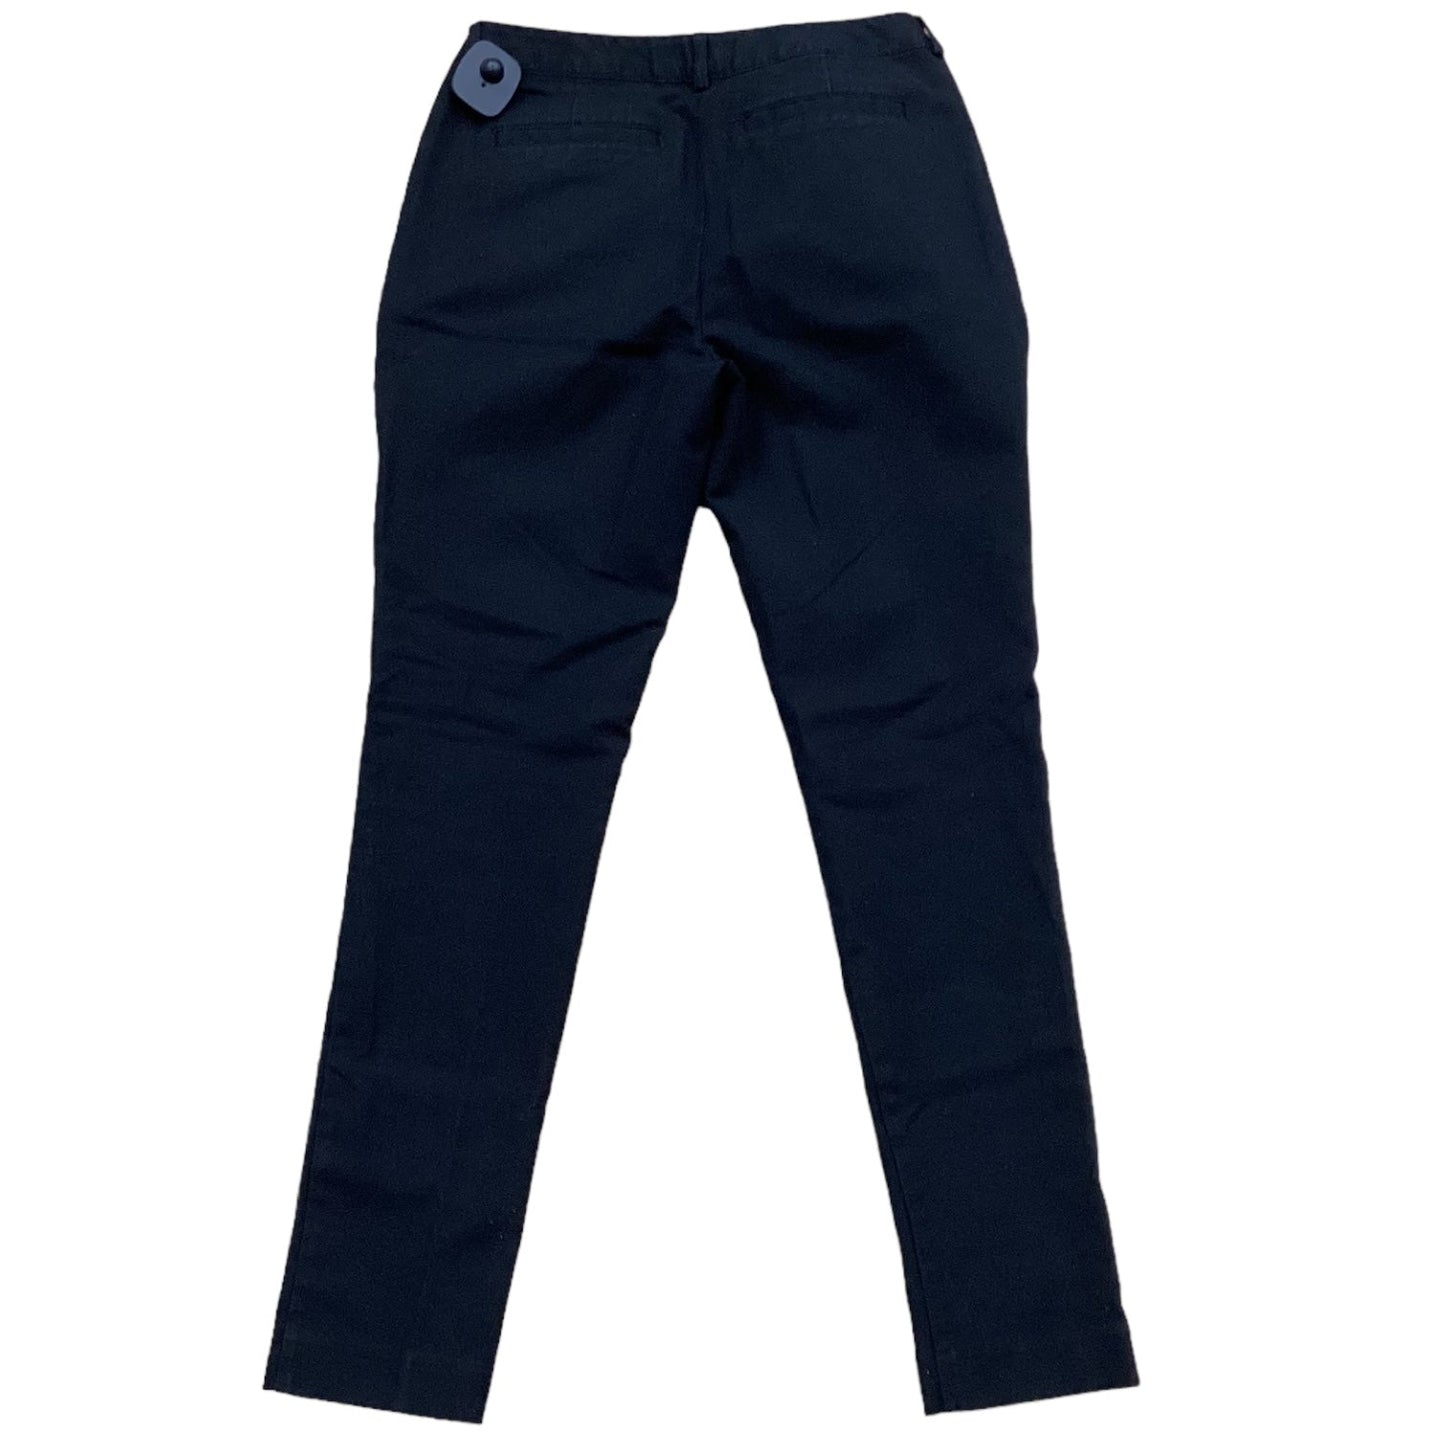 Black Pants Designer Michael Kors, Size 2